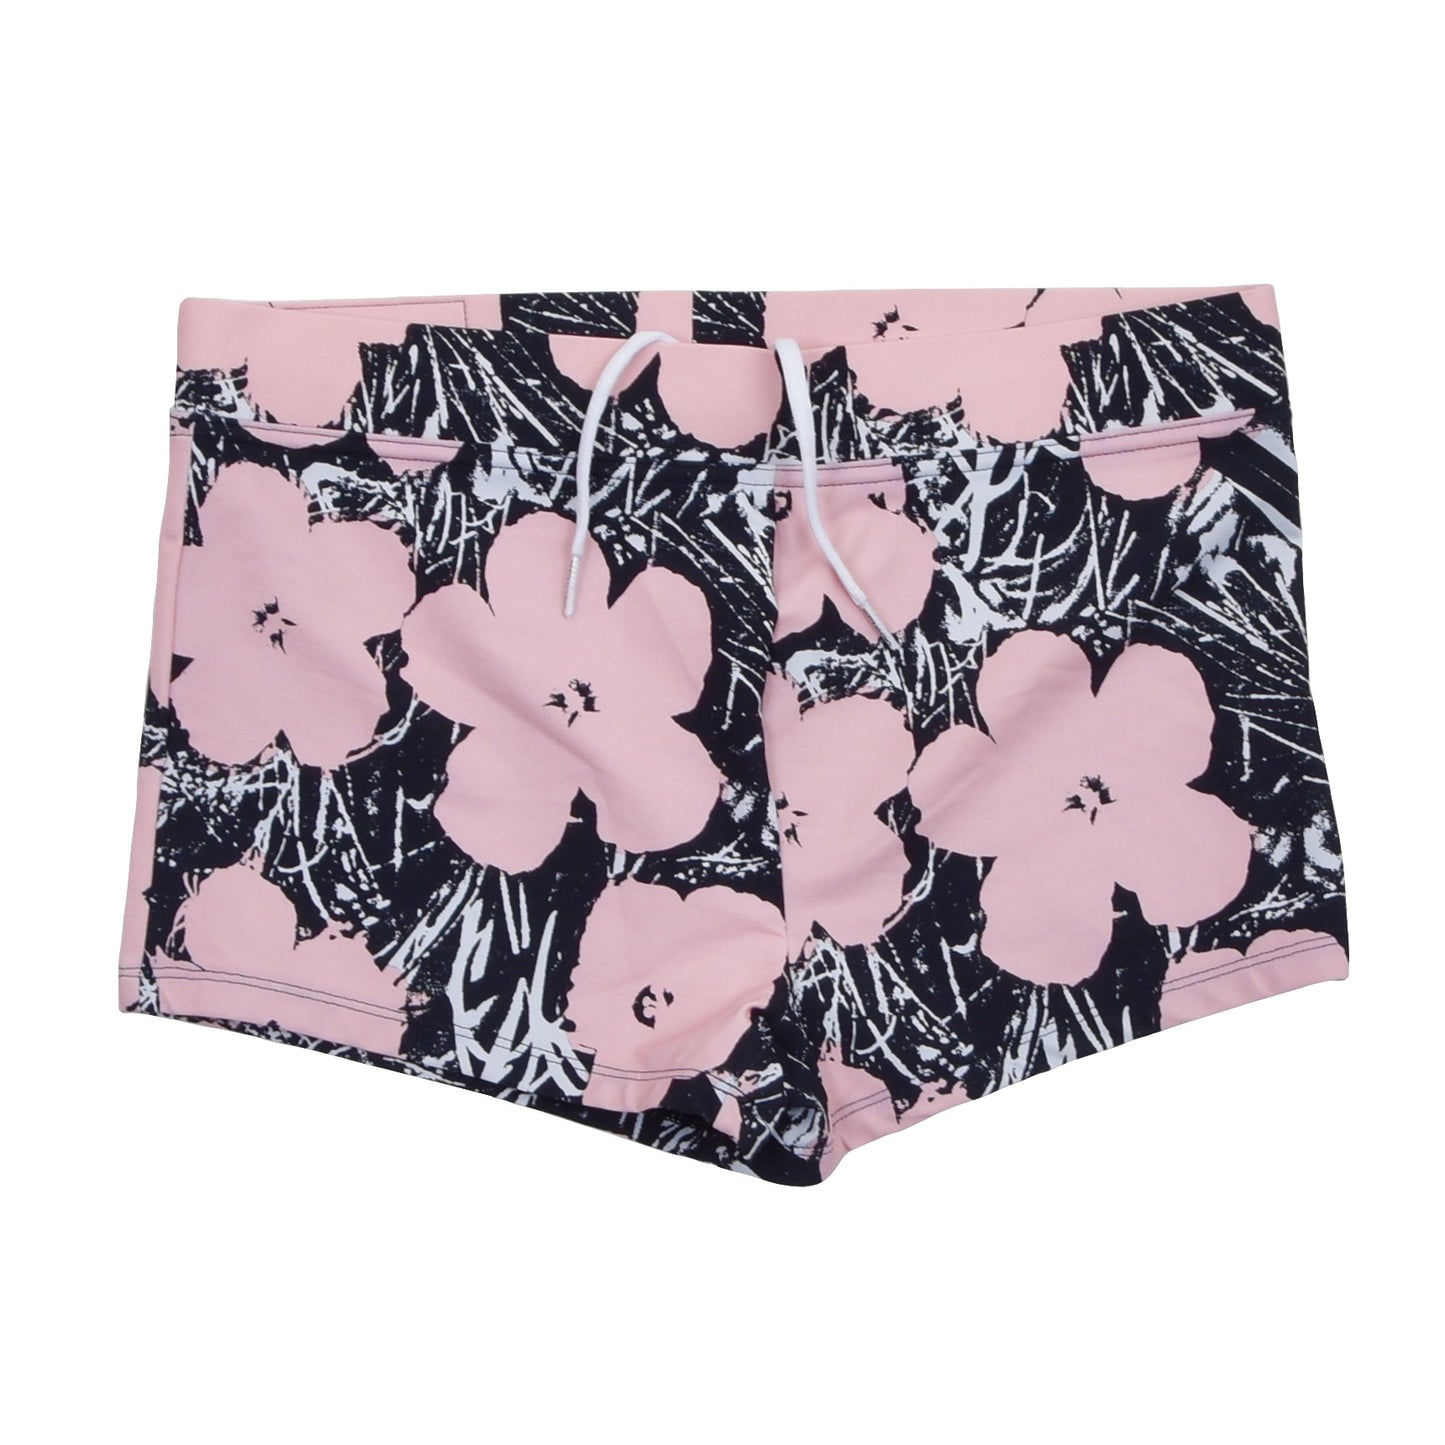 Andy Warhol x Calvin Klein Swim Shorts Size M - Pink Hibiscus